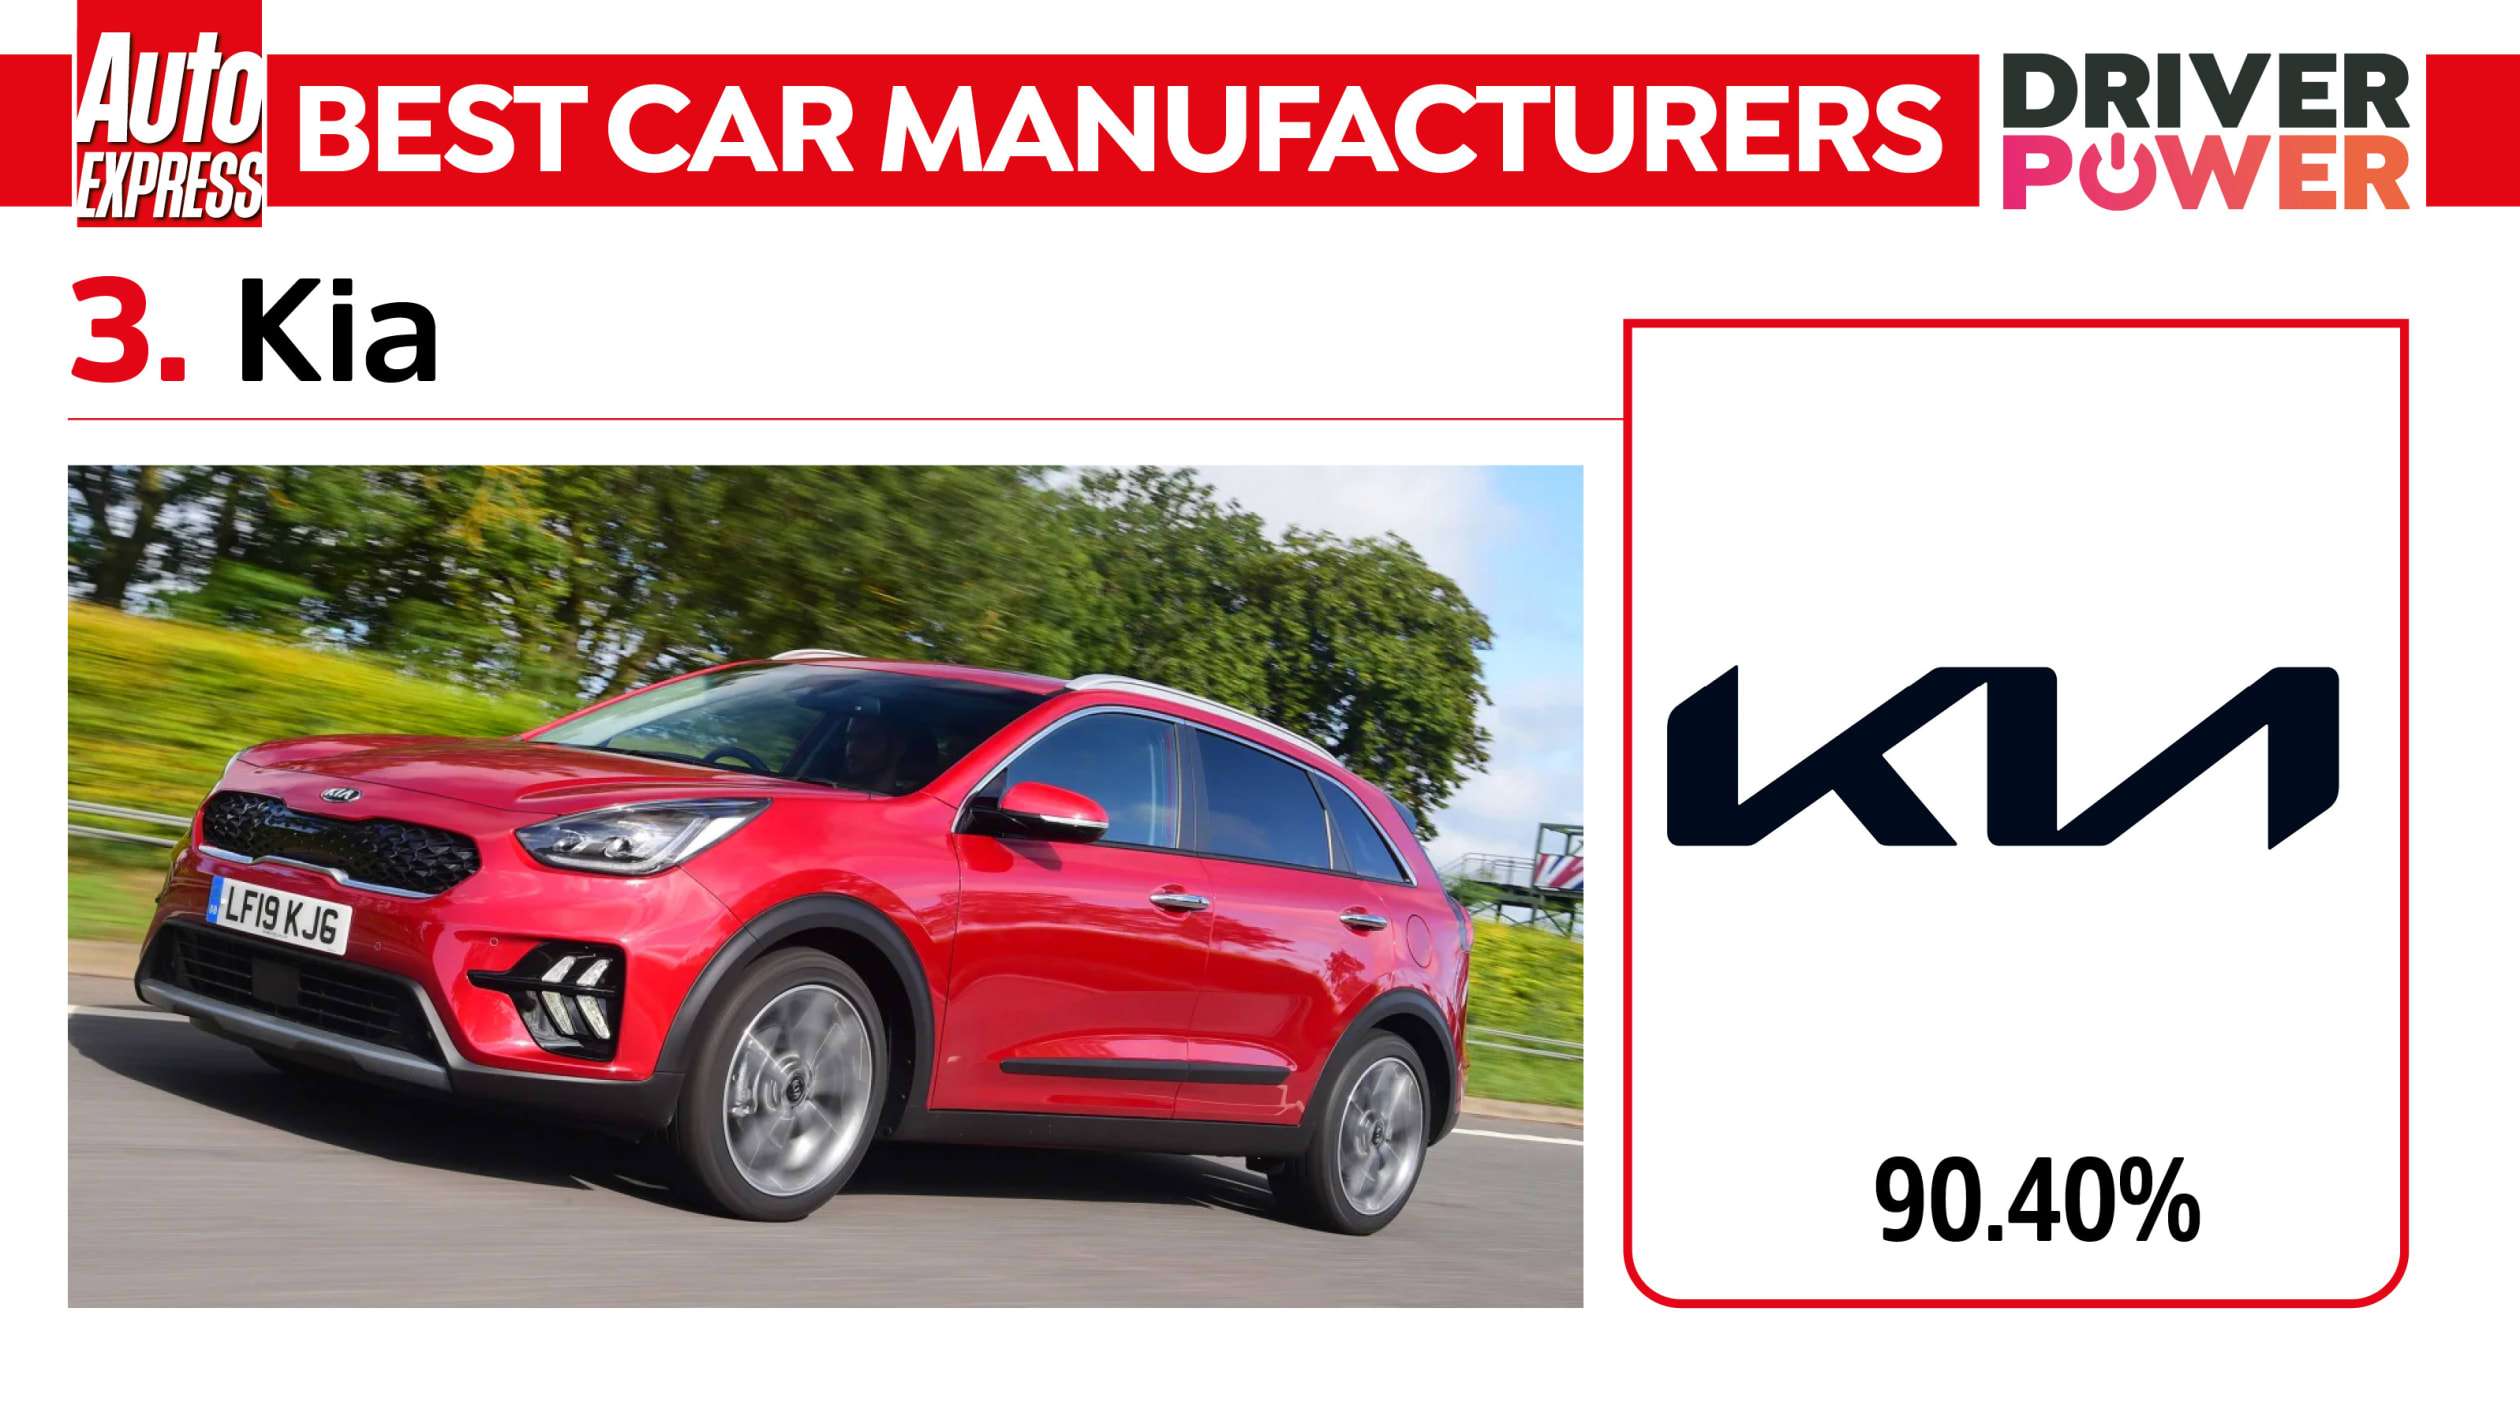 Kia - best car manufacturers